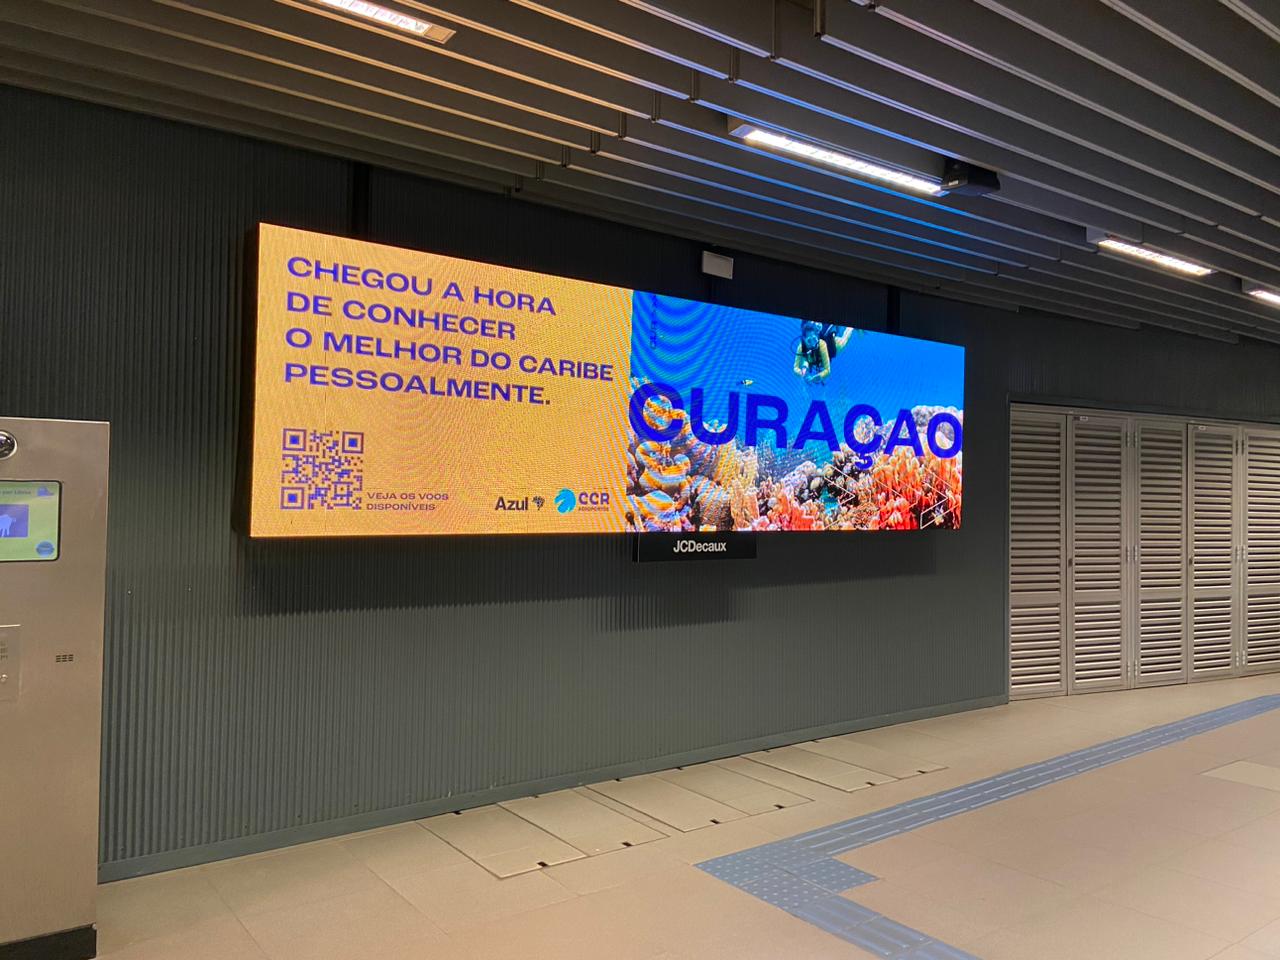 CCR Aeroportos, main shareholder of CAP, and Azul Linhas Aéreas launch promotional campaign for Curaçao in Brazil